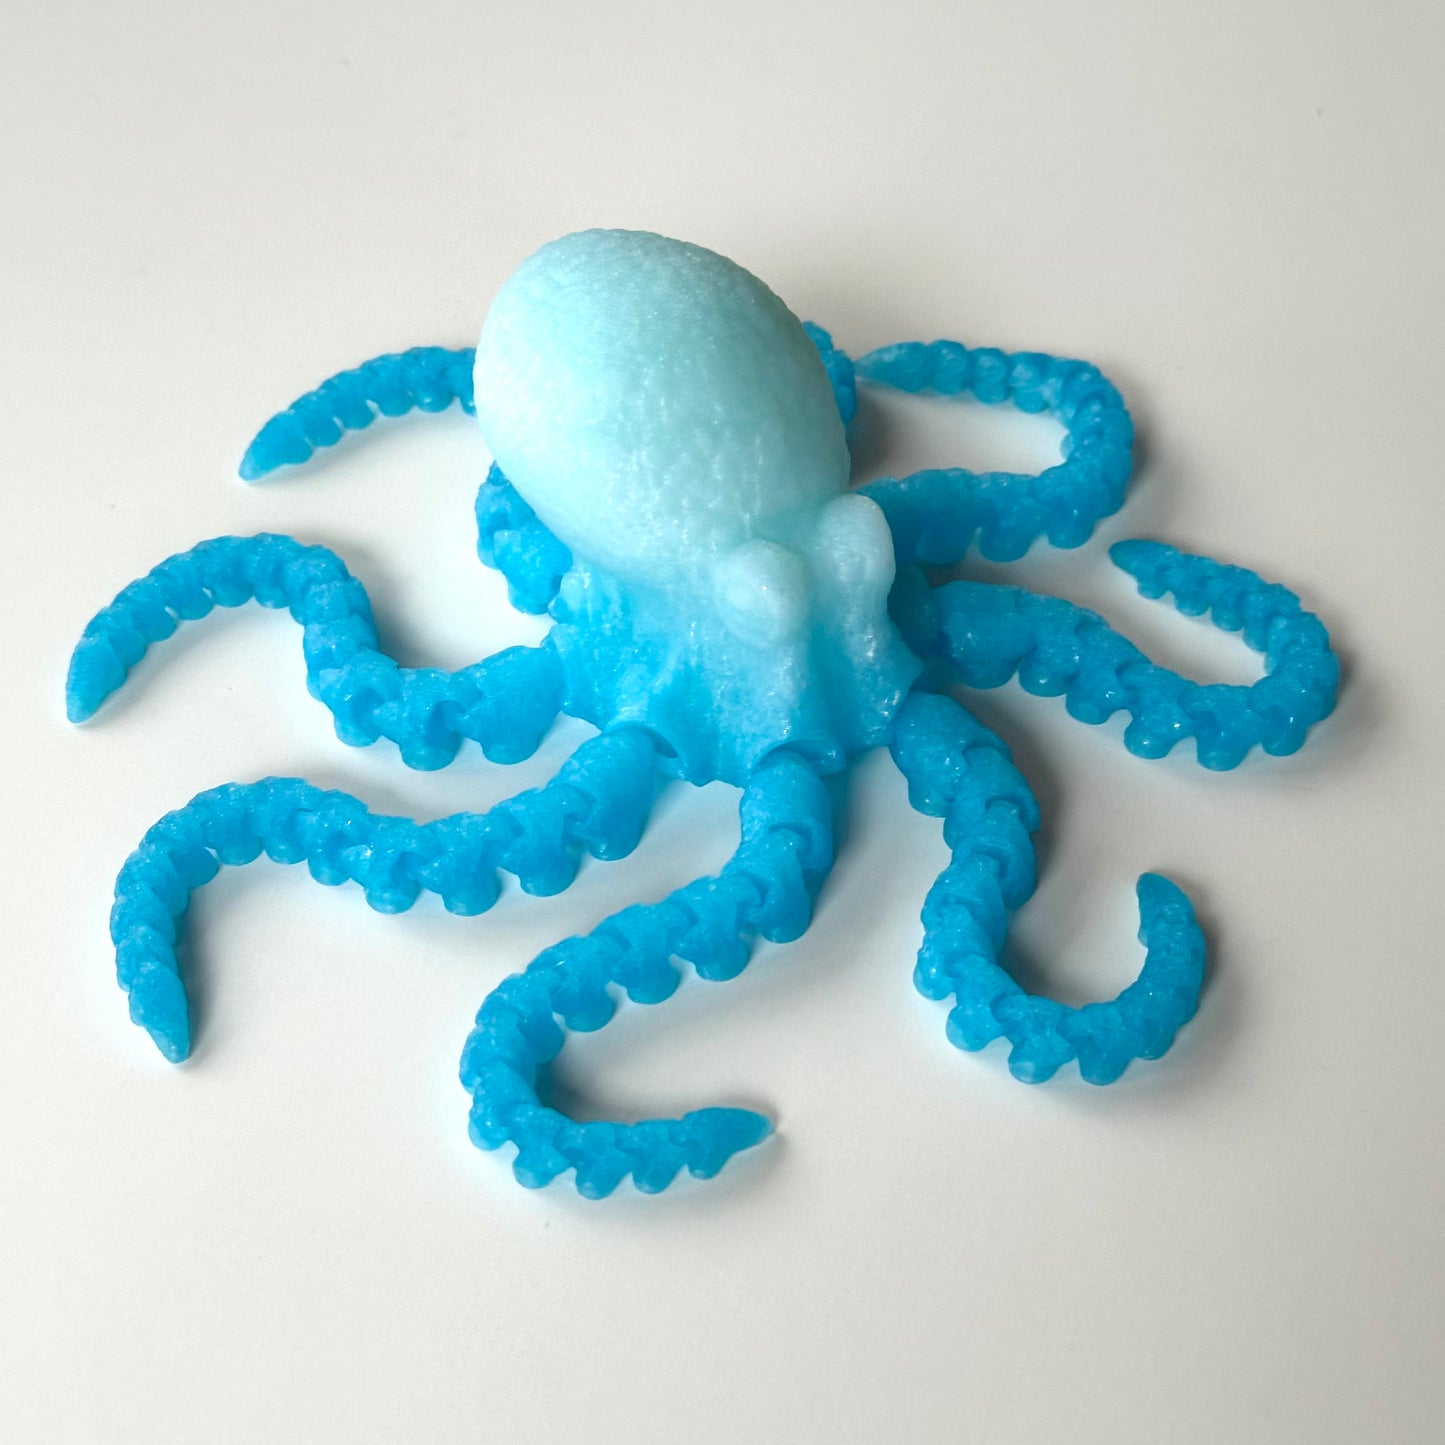 Octopus - 3D Printed Articulating Figure